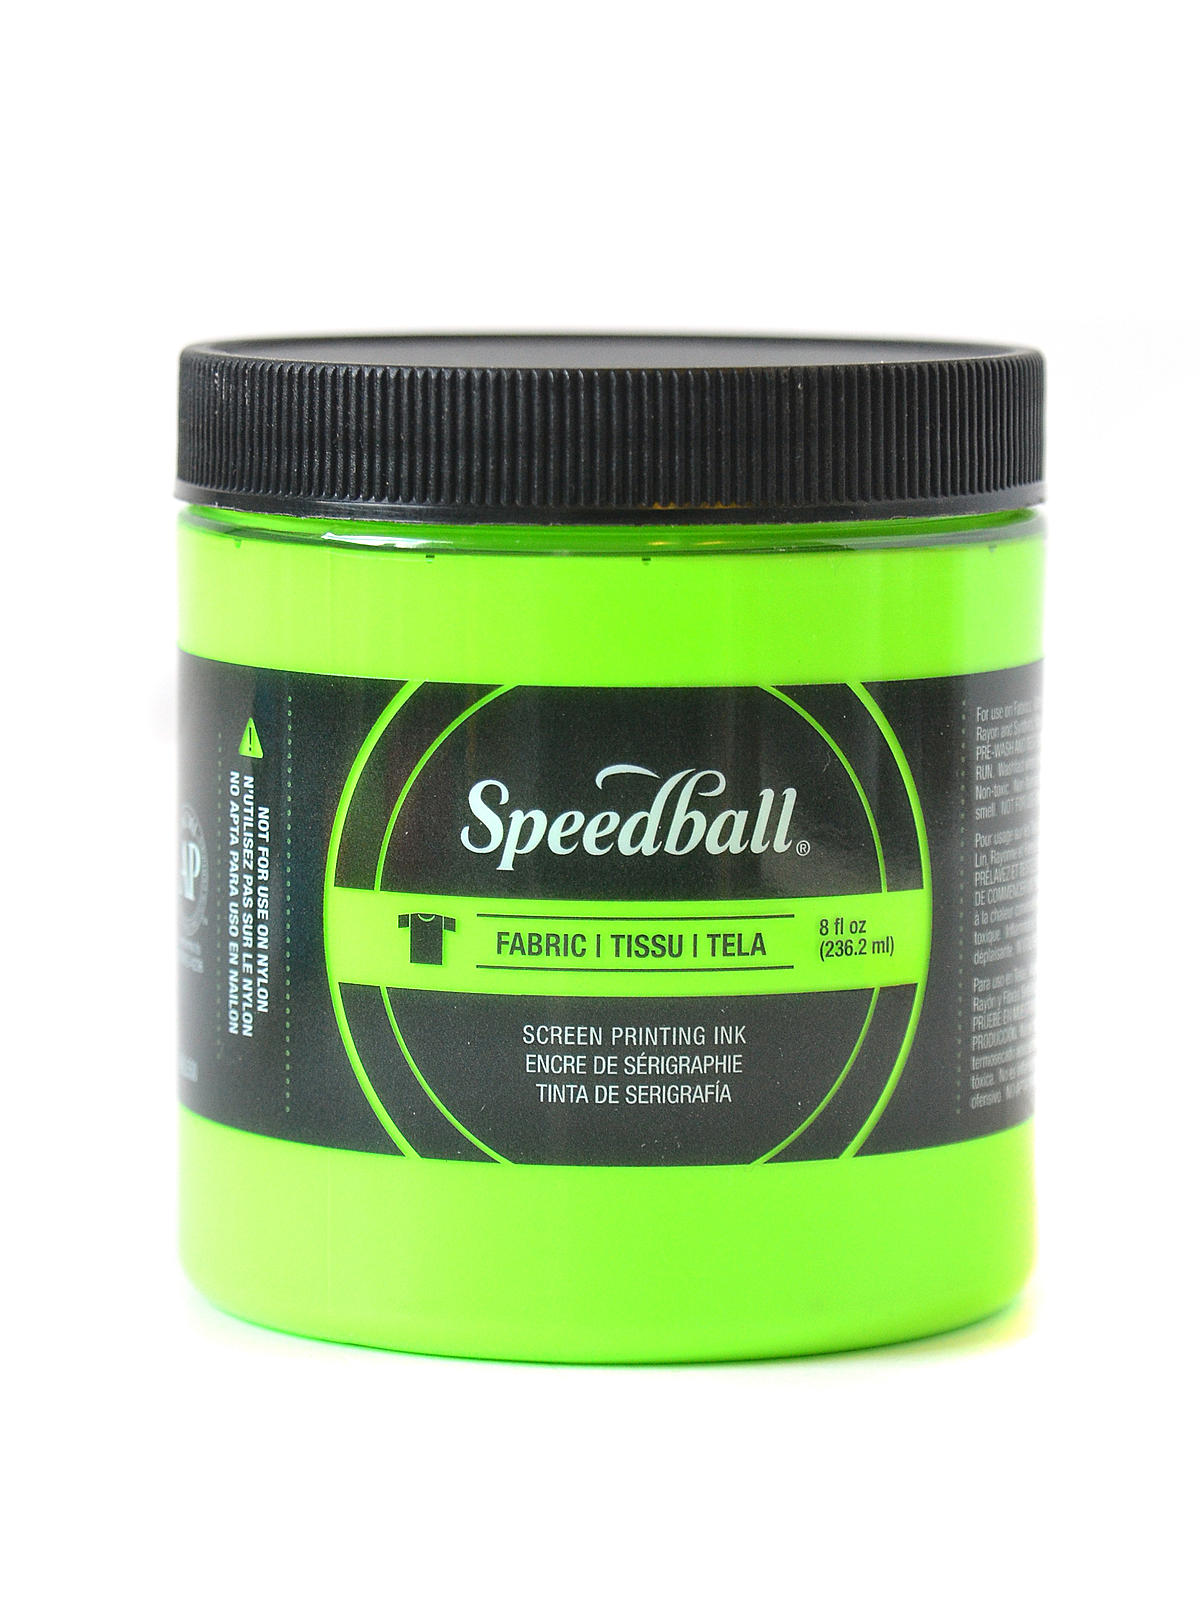 Speedball Screen Prtg Ink 8oz Lime Green for sale online